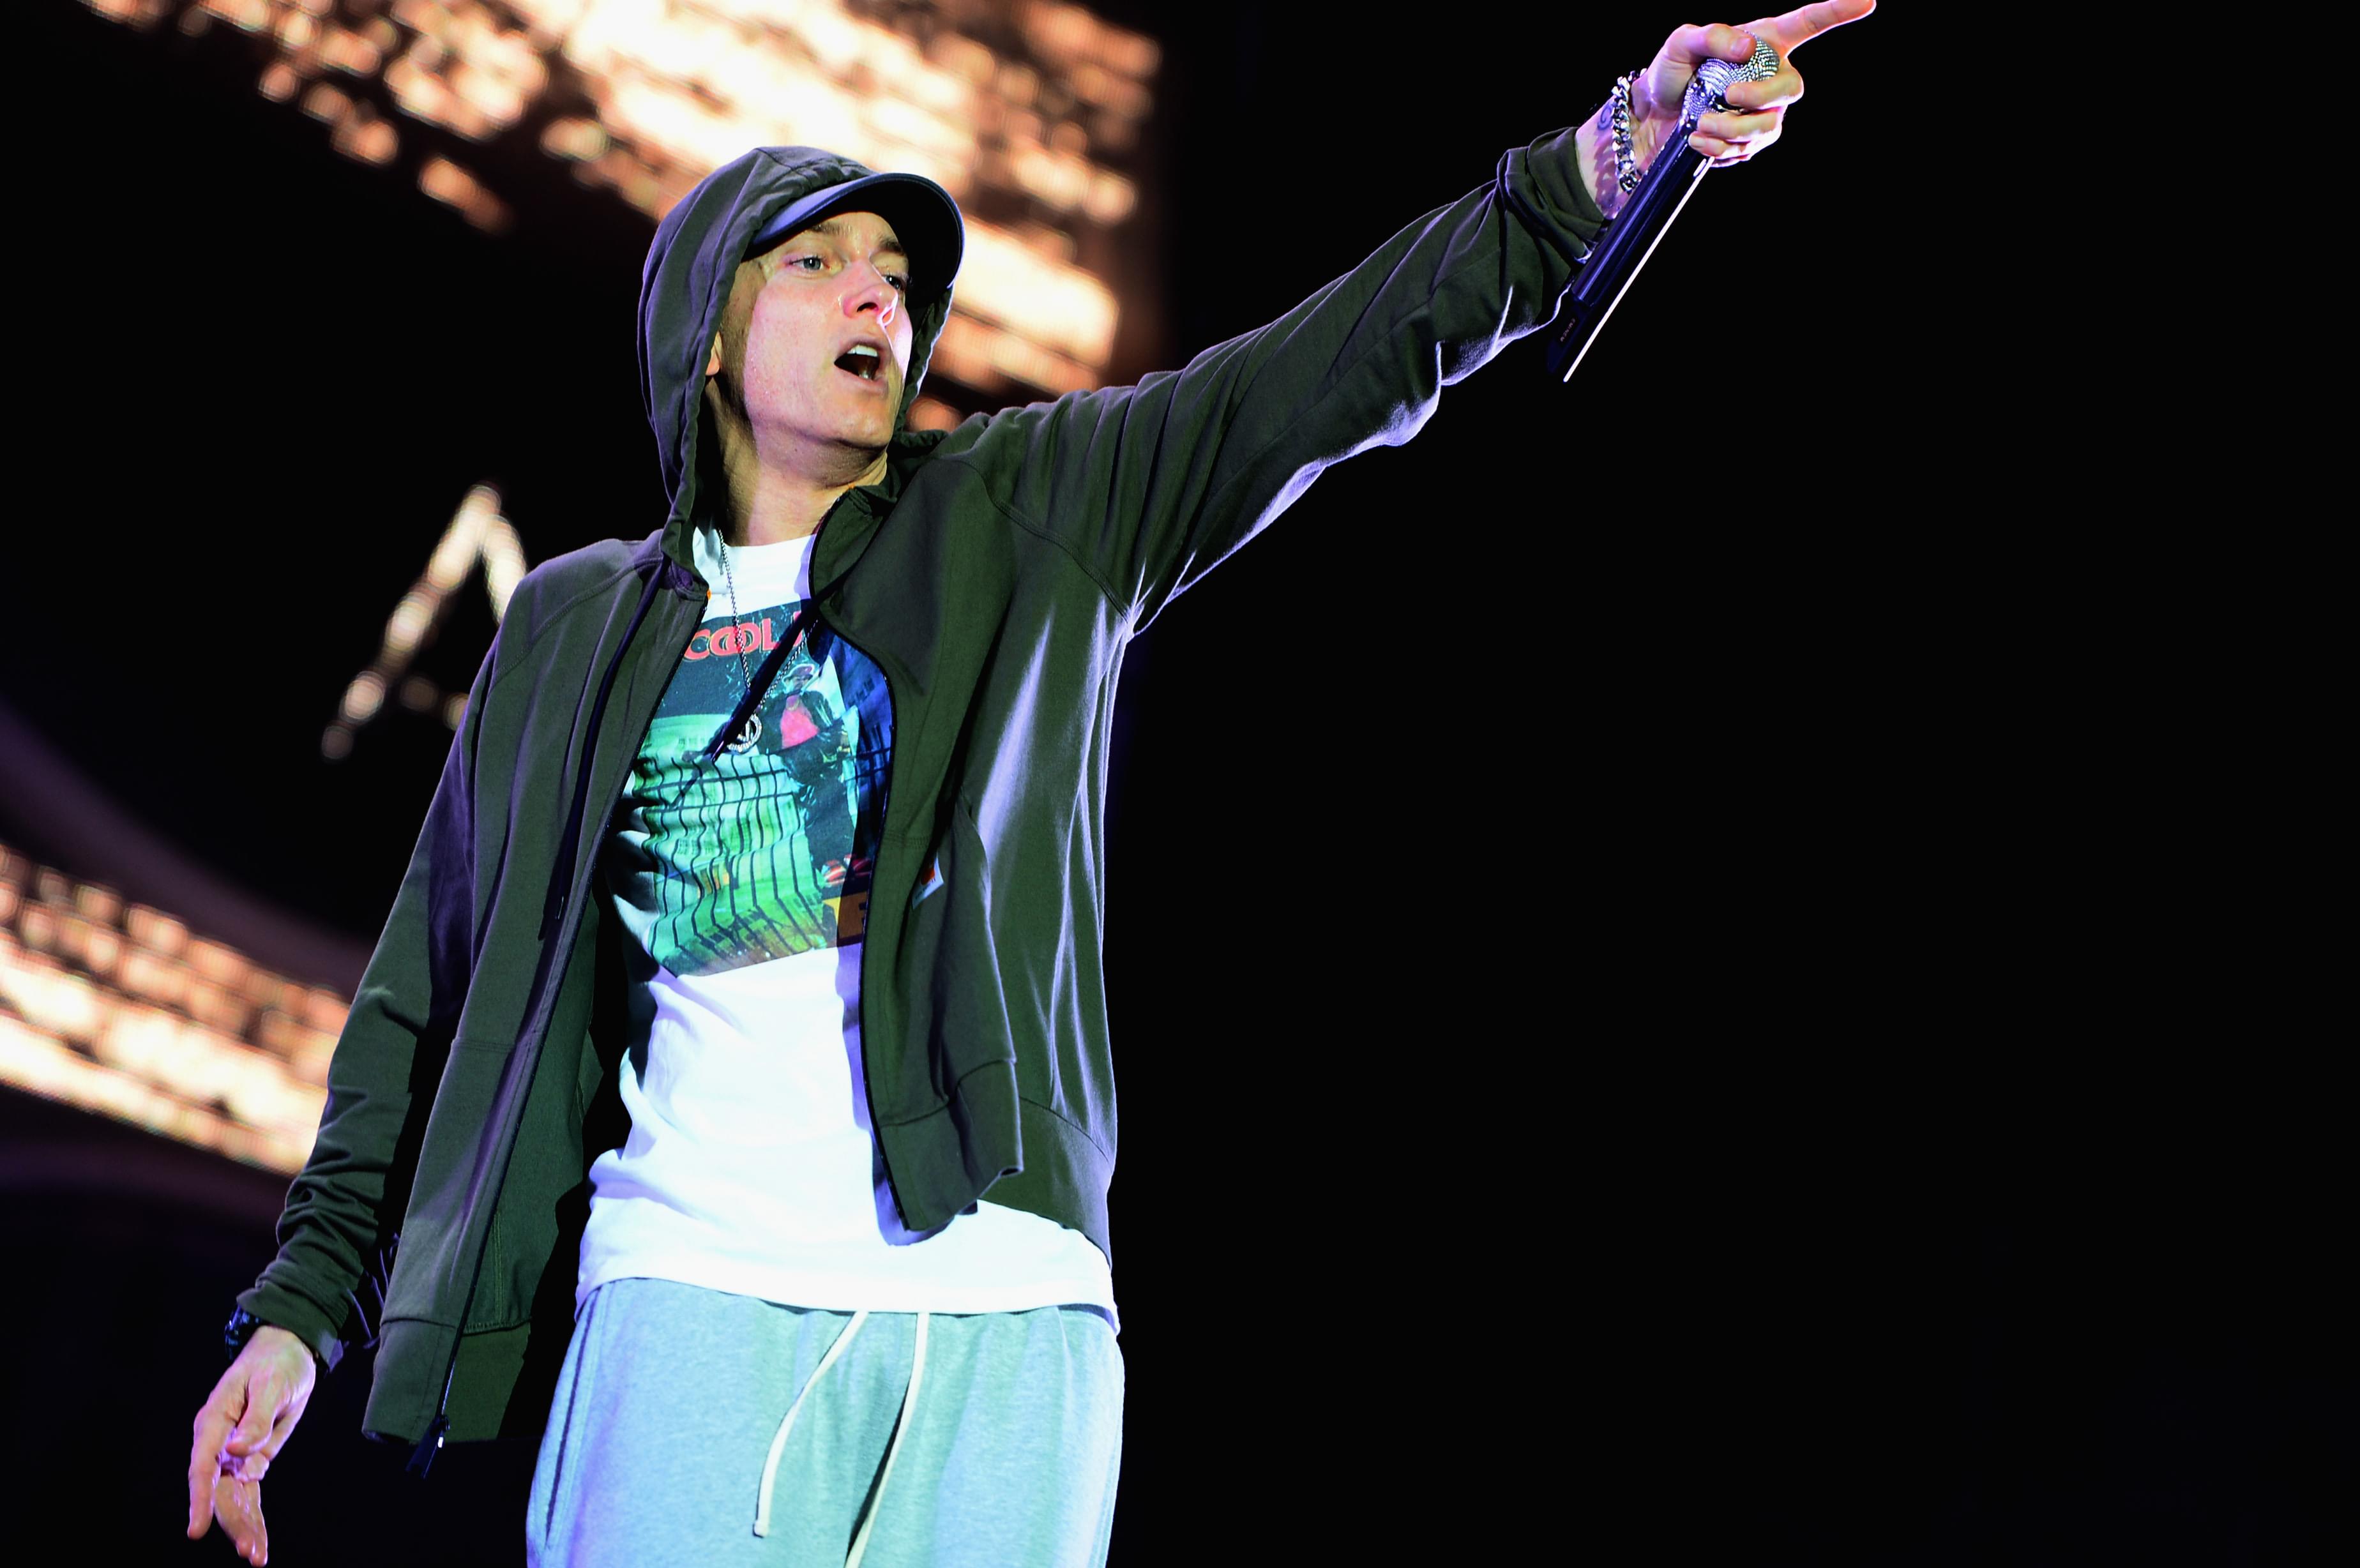 Havoc of Mobb Deep Endorses Eminem